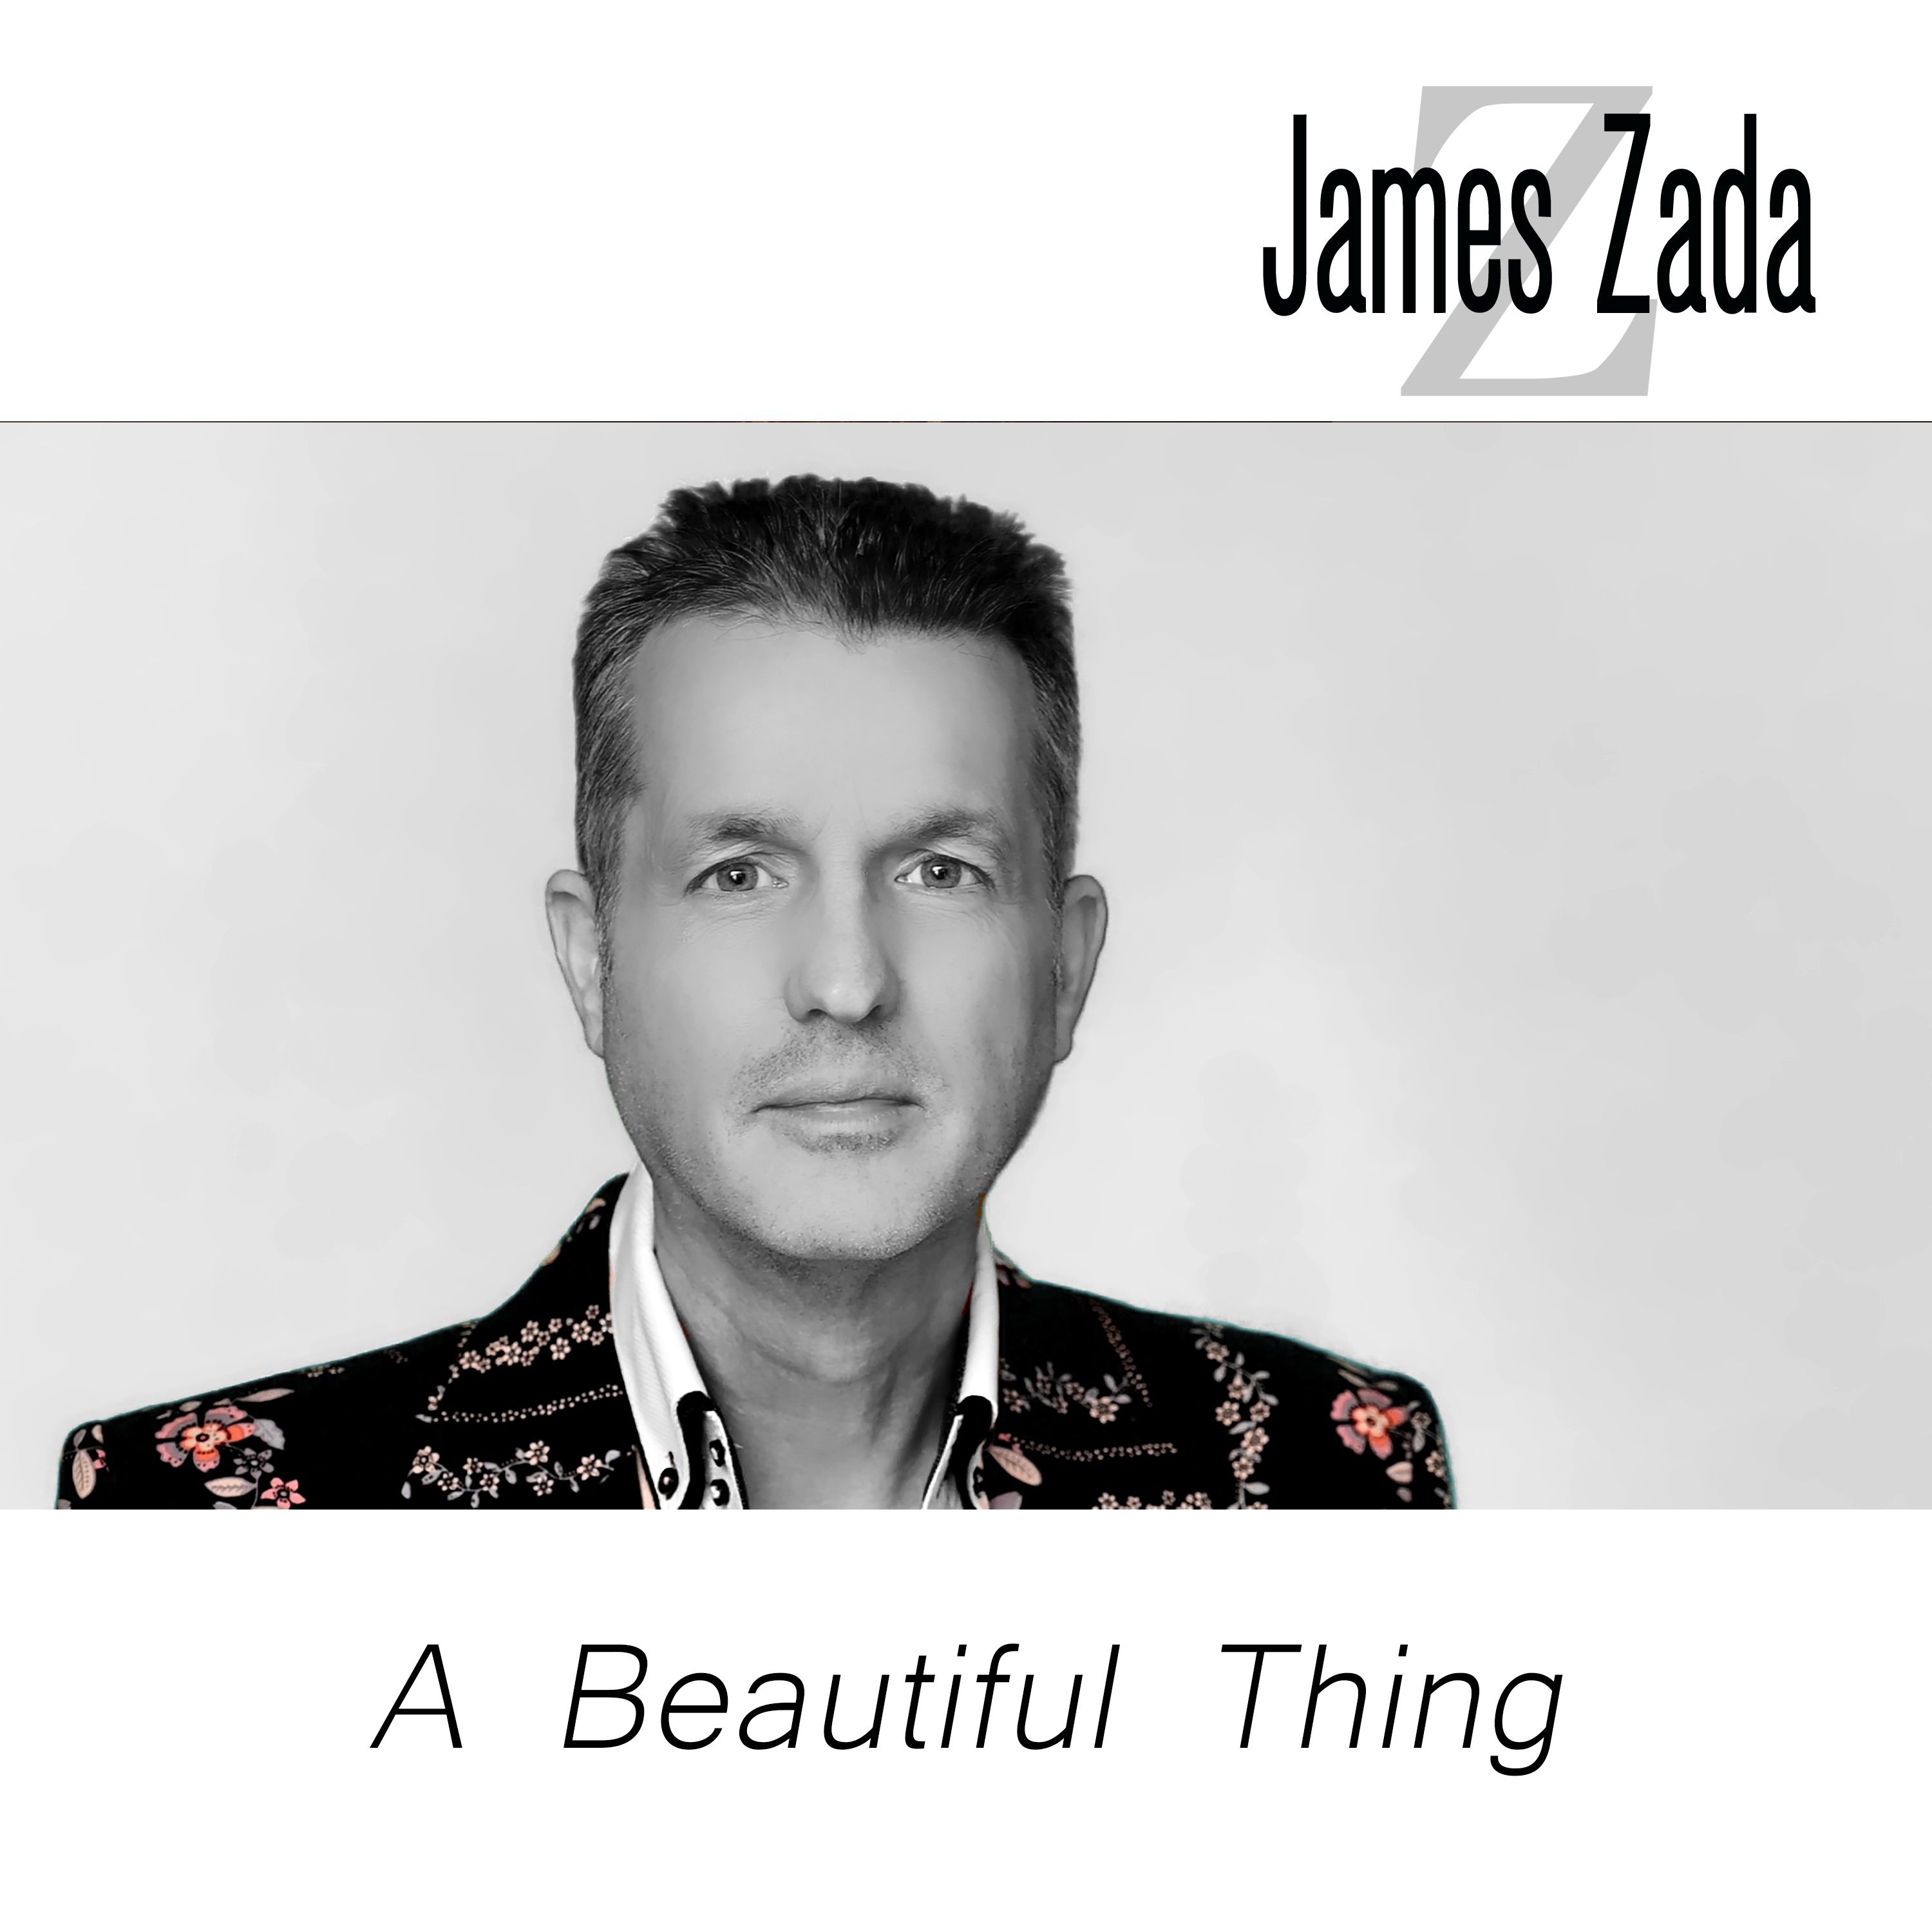 James Zada